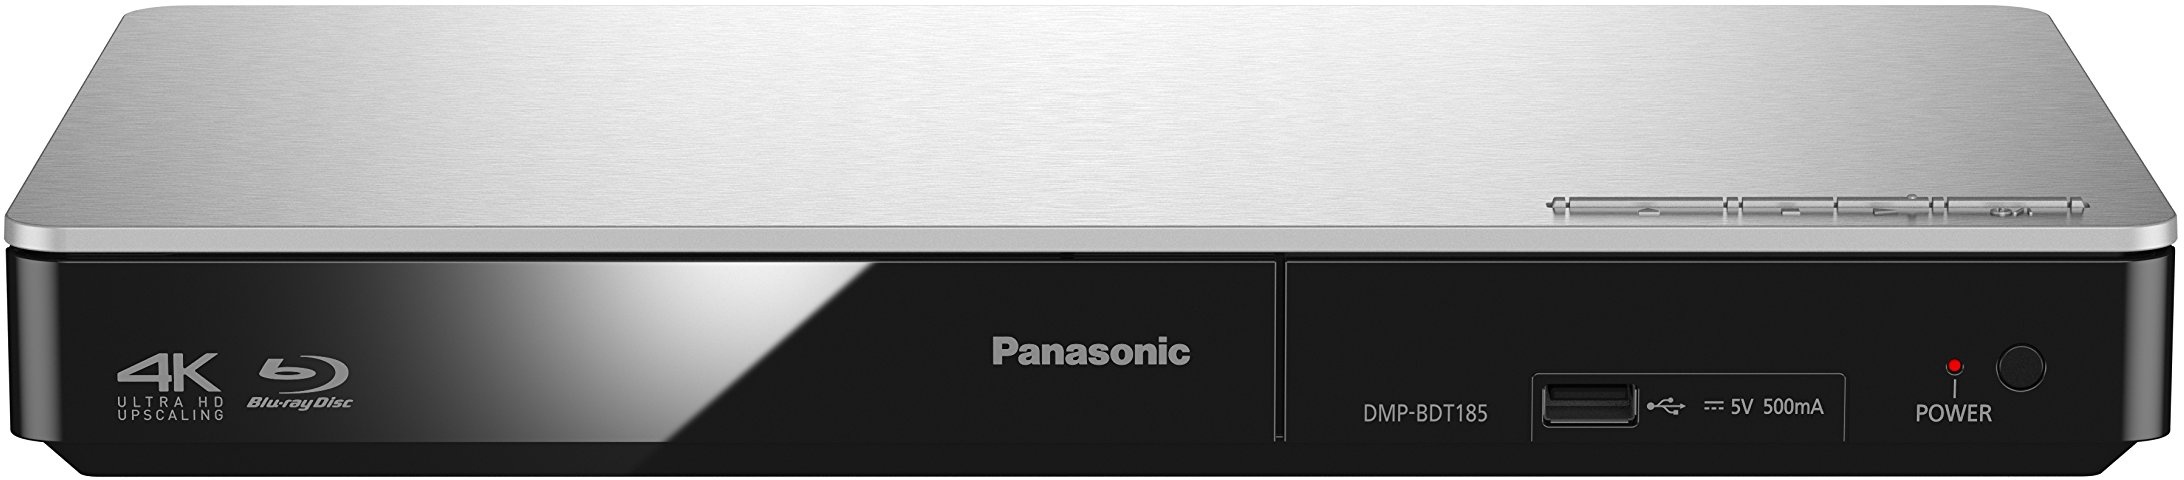 Panasonic DMP-BDT185EG 3D Blu-ray Player (4K Upscaling, DLNA, VoD, HDMI-Steuerung, USB, MKV-Playback) silber